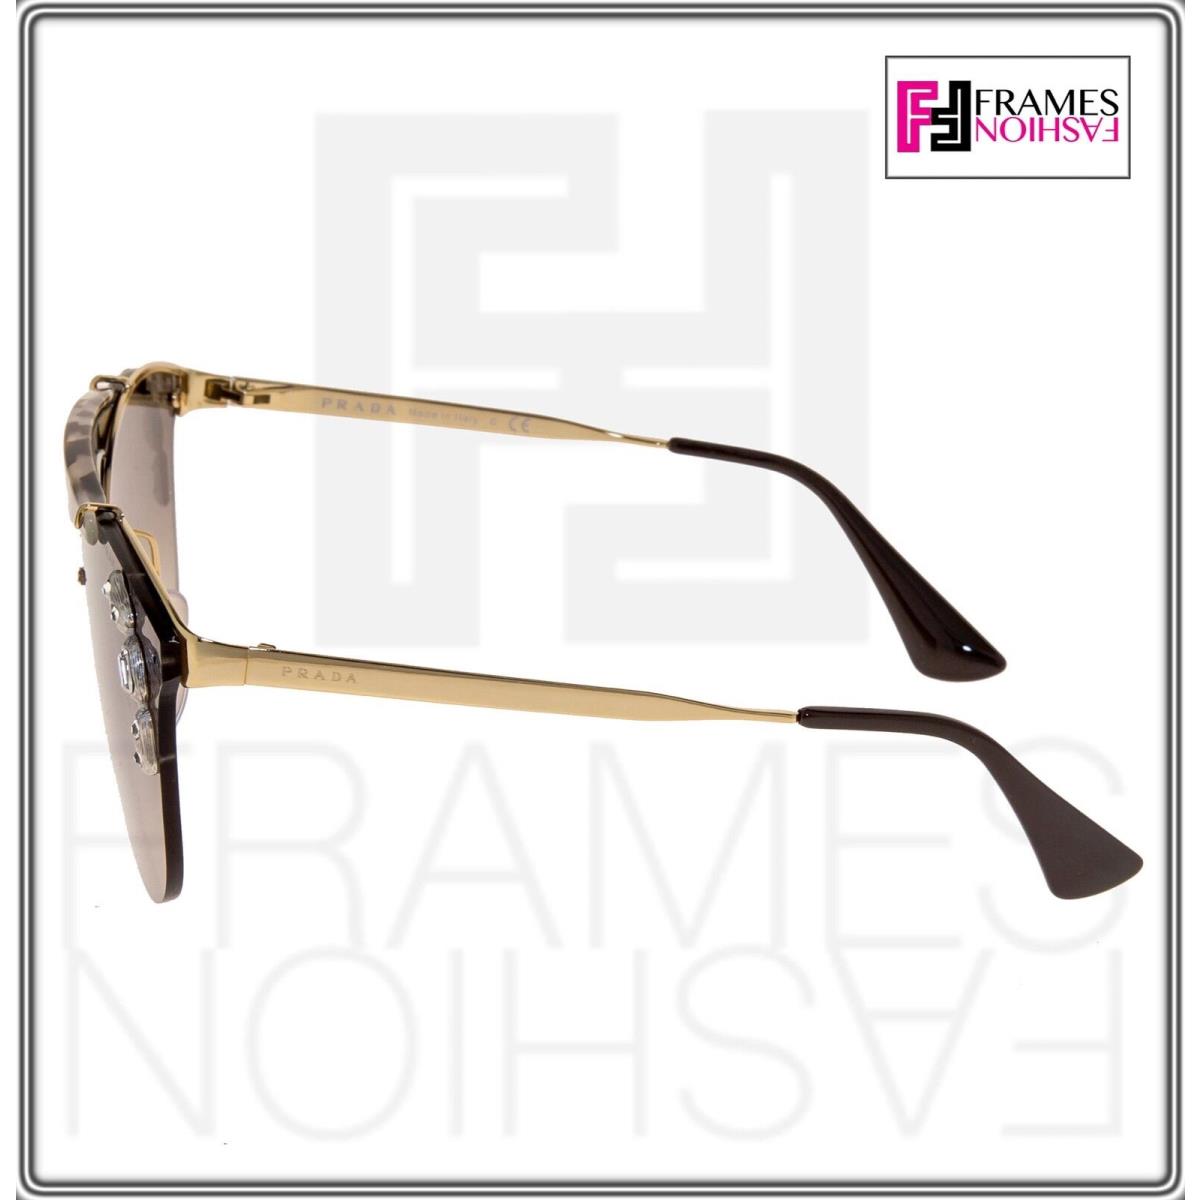 Prada 53U Ornate Shield Brow Bar Jewel Sunglasses Gold Chalk White Brown PR53US - C3O-3D0, Frame: Gold, Lens: Brown